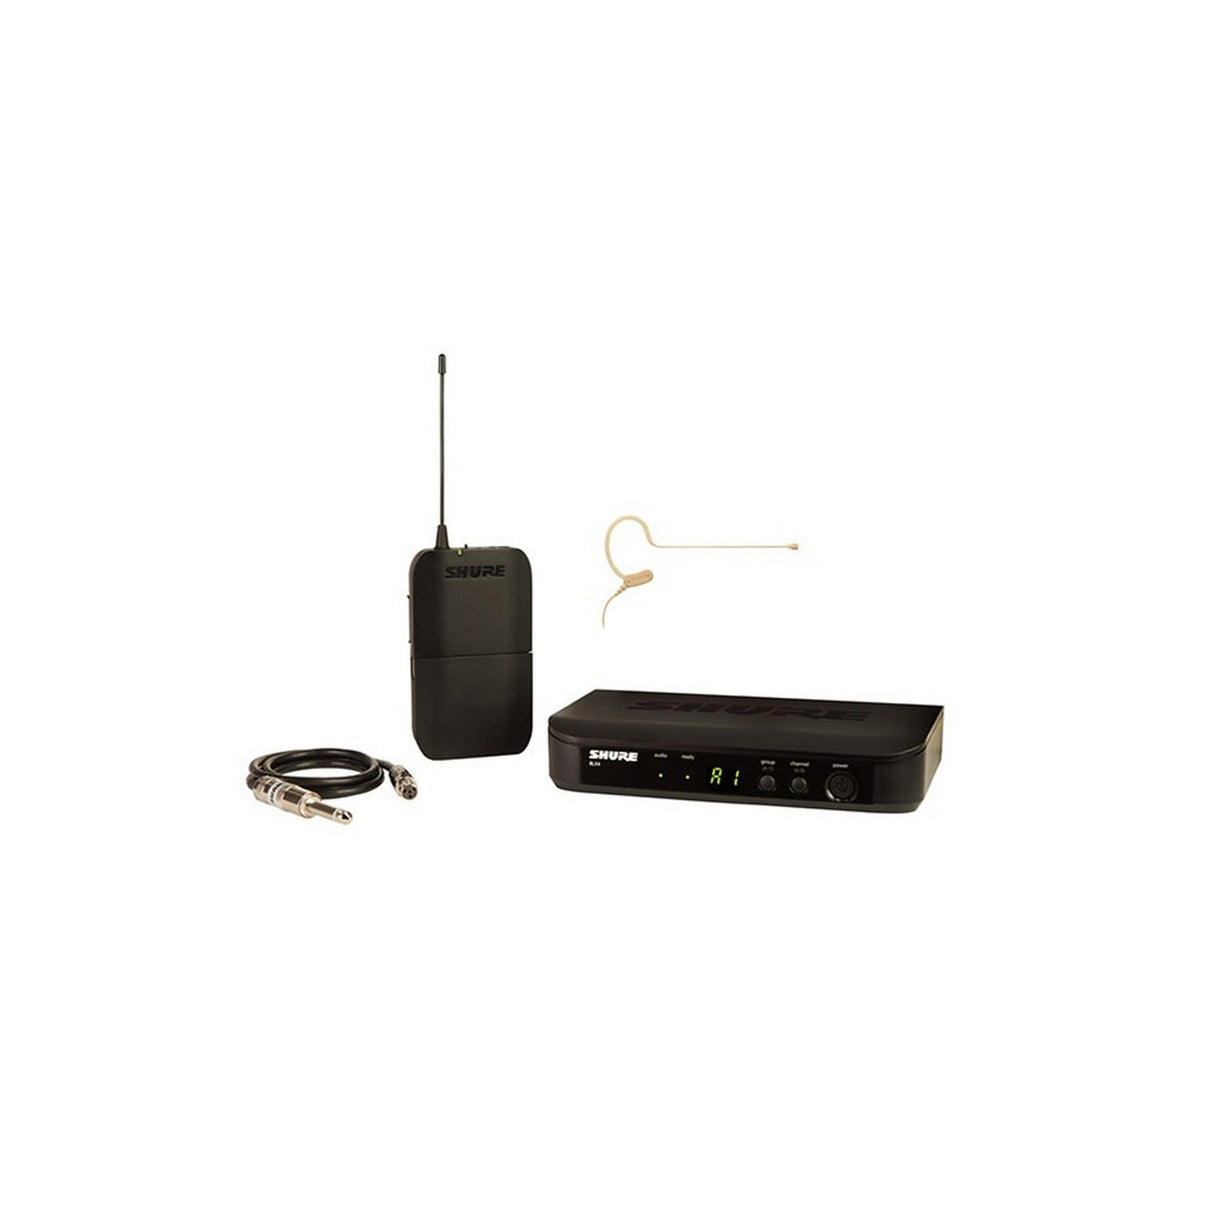 Shure BLX14-MX153T/O-TQG Omnidirectional Earset Wireless Guitar Microphone System, J11 596-616 MHz